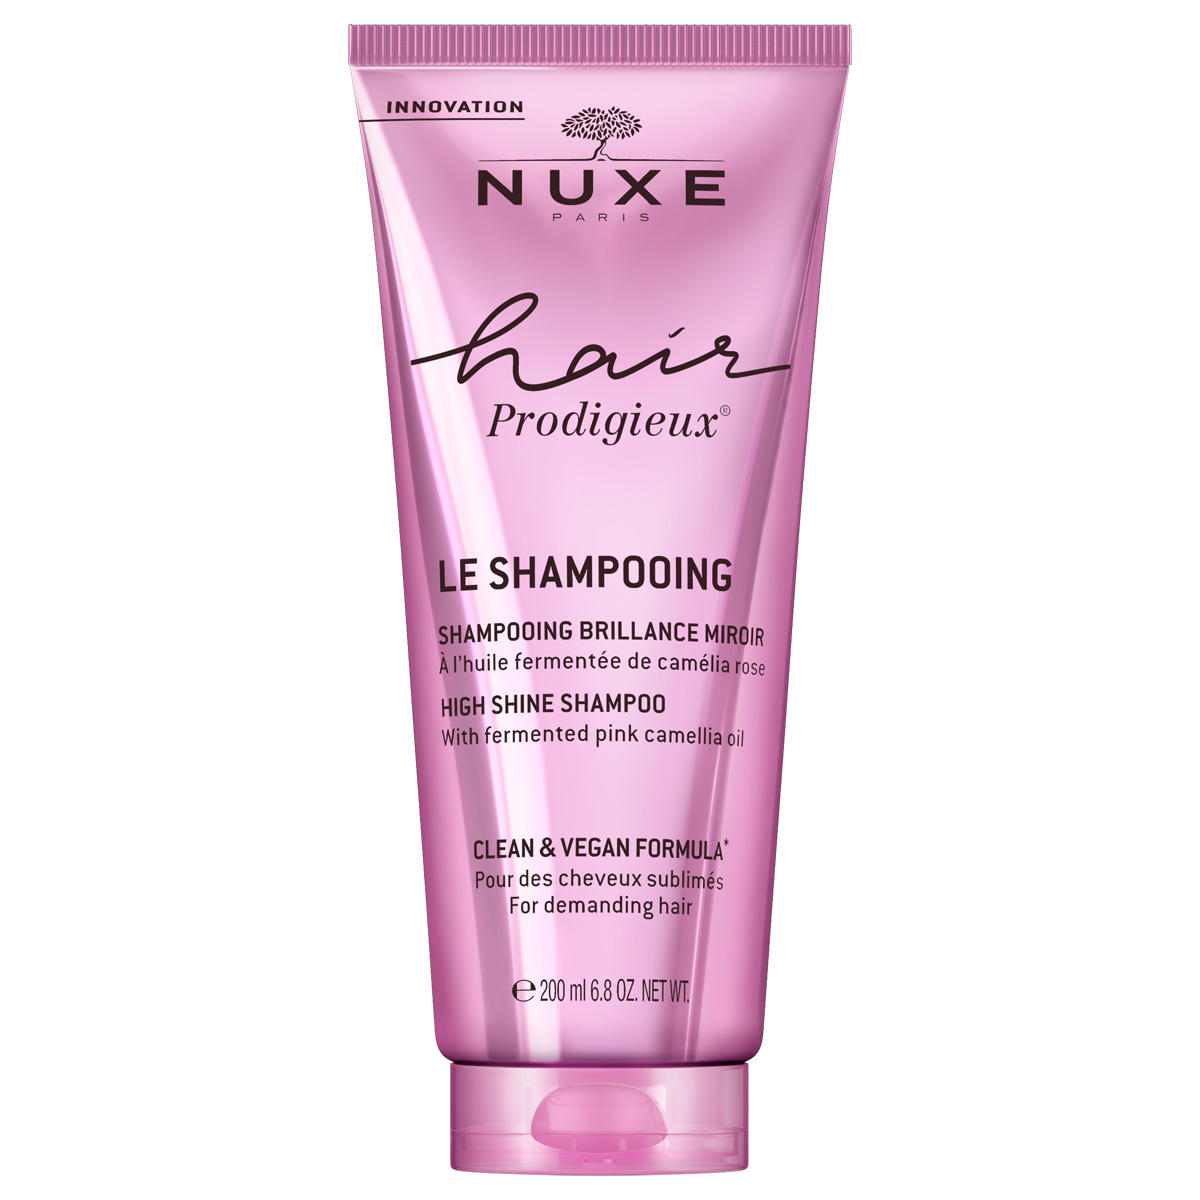 NUXE Hair Prodigieux Shampooing Brillance Miroir  - 1